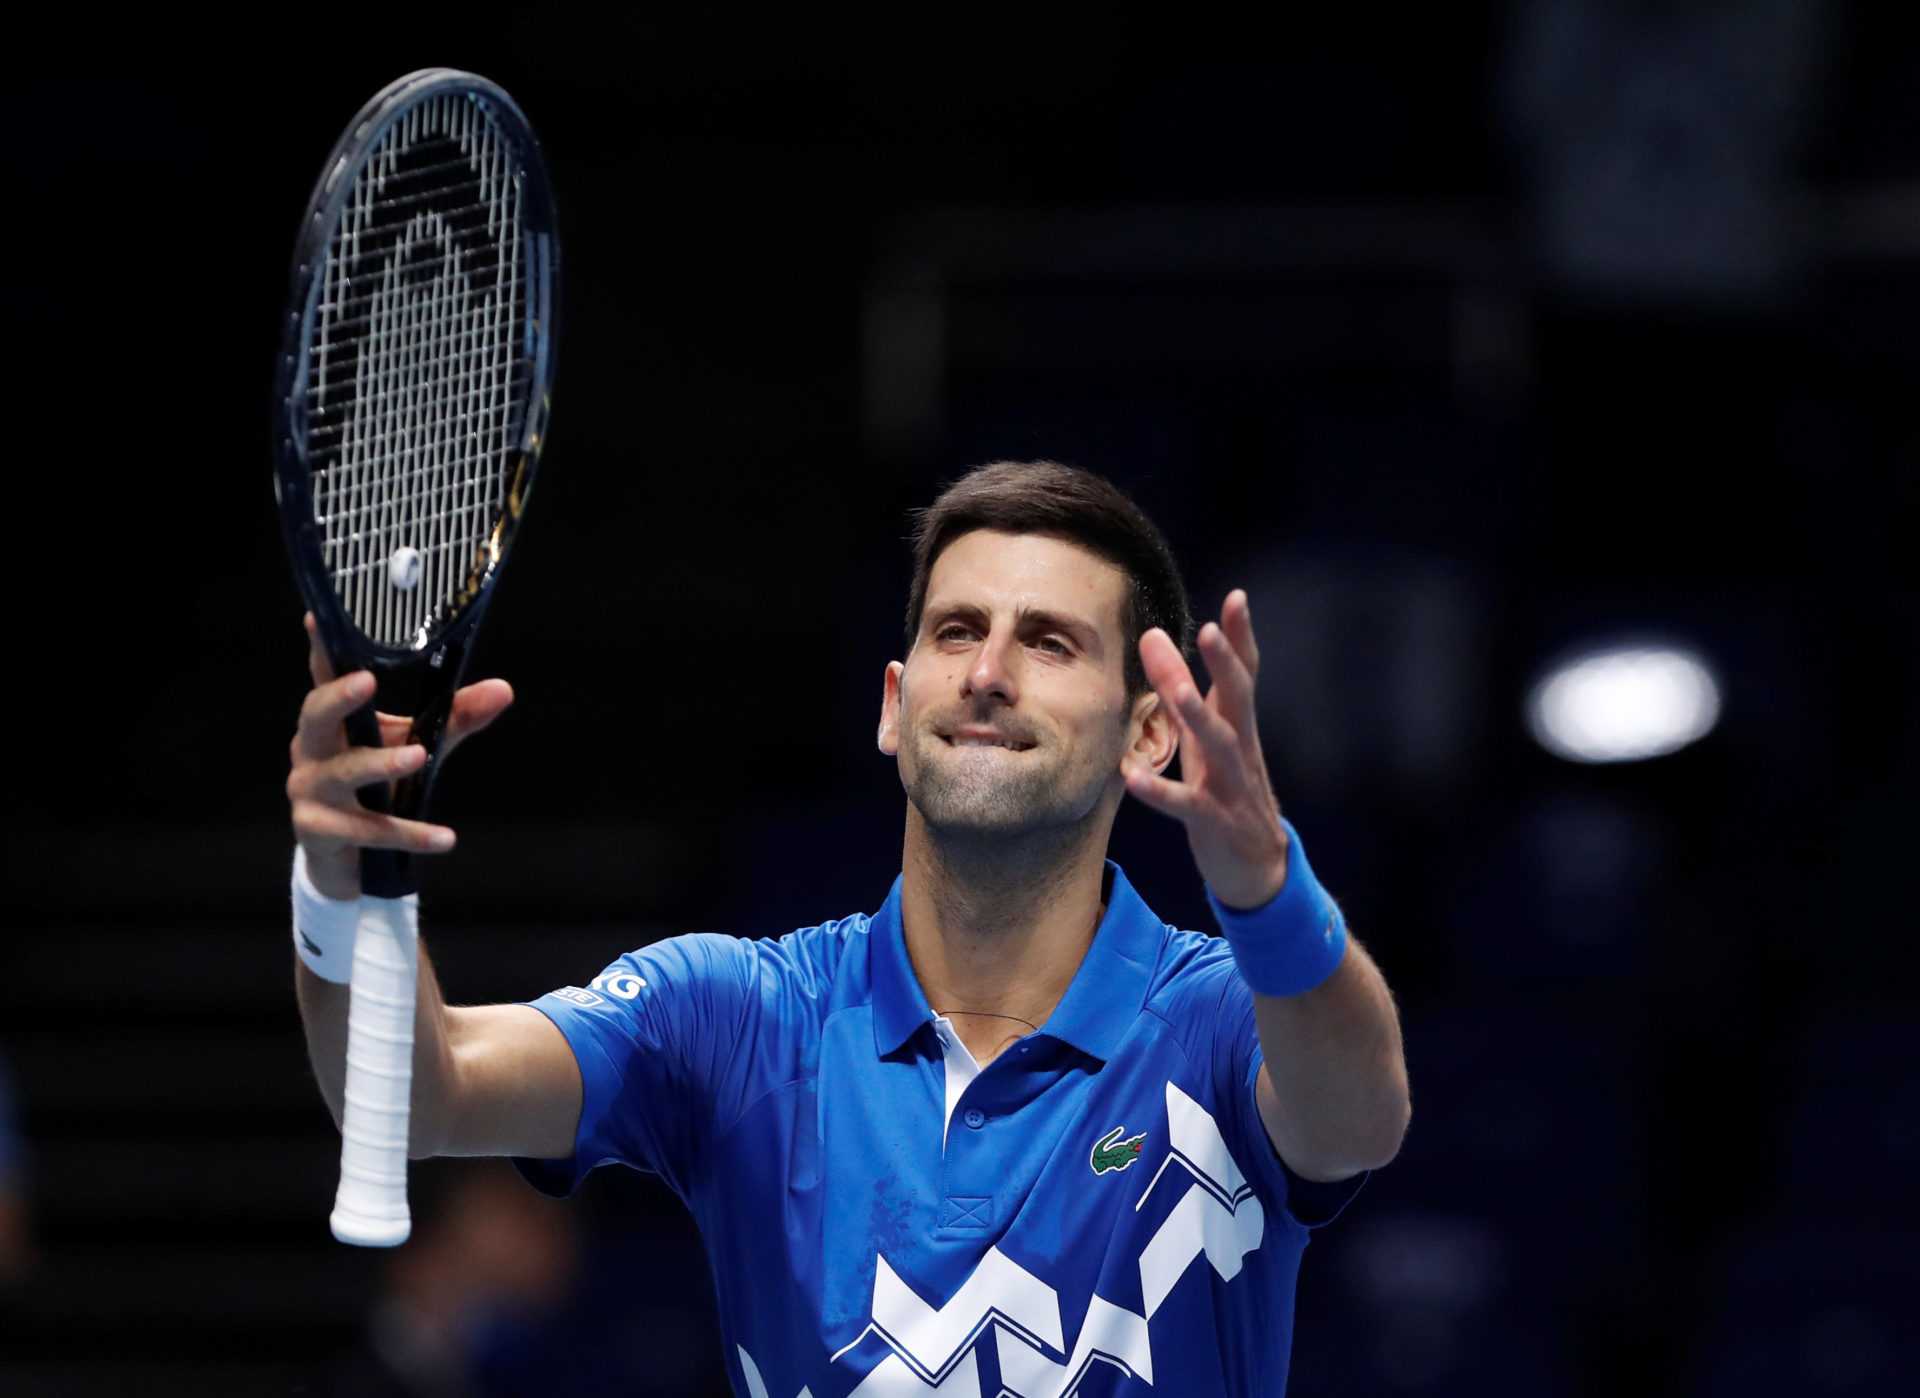 L'Open d'Australie 2021 accueillera 50% d'audience, déclare Novak Djokovic